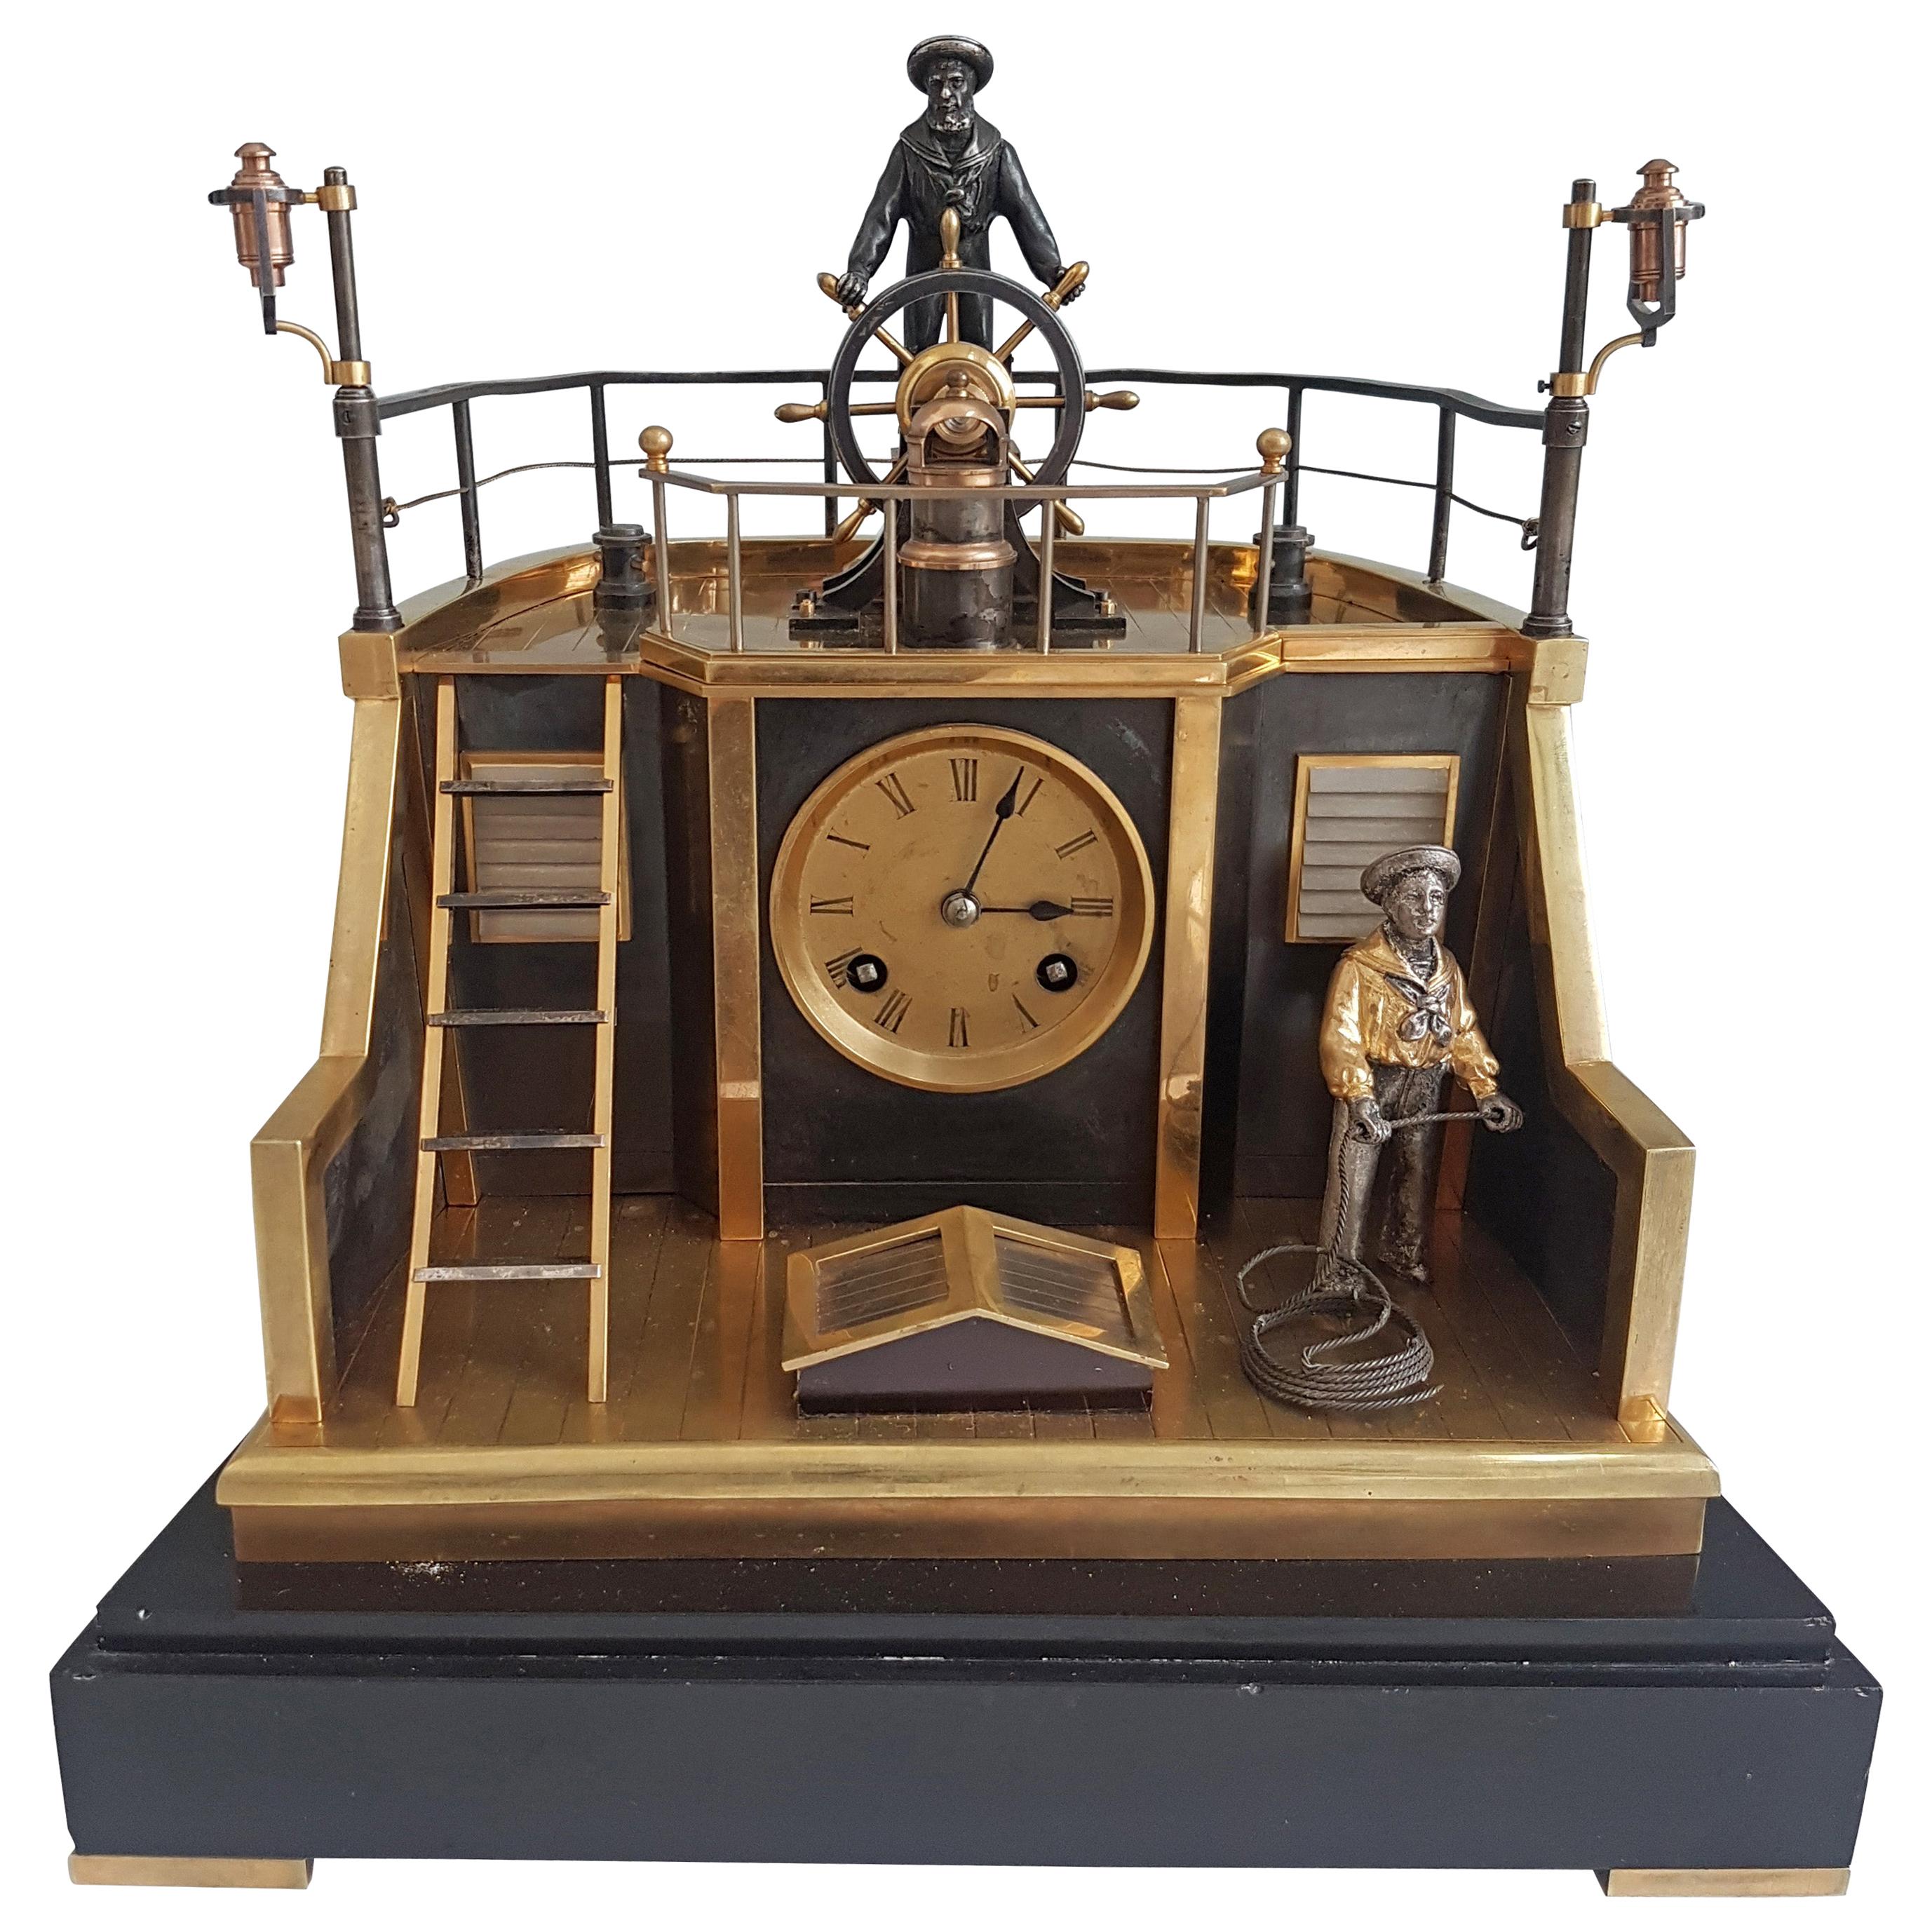 Automaton Industrial Series Quarterdeck Mantel Clock by Guilmet